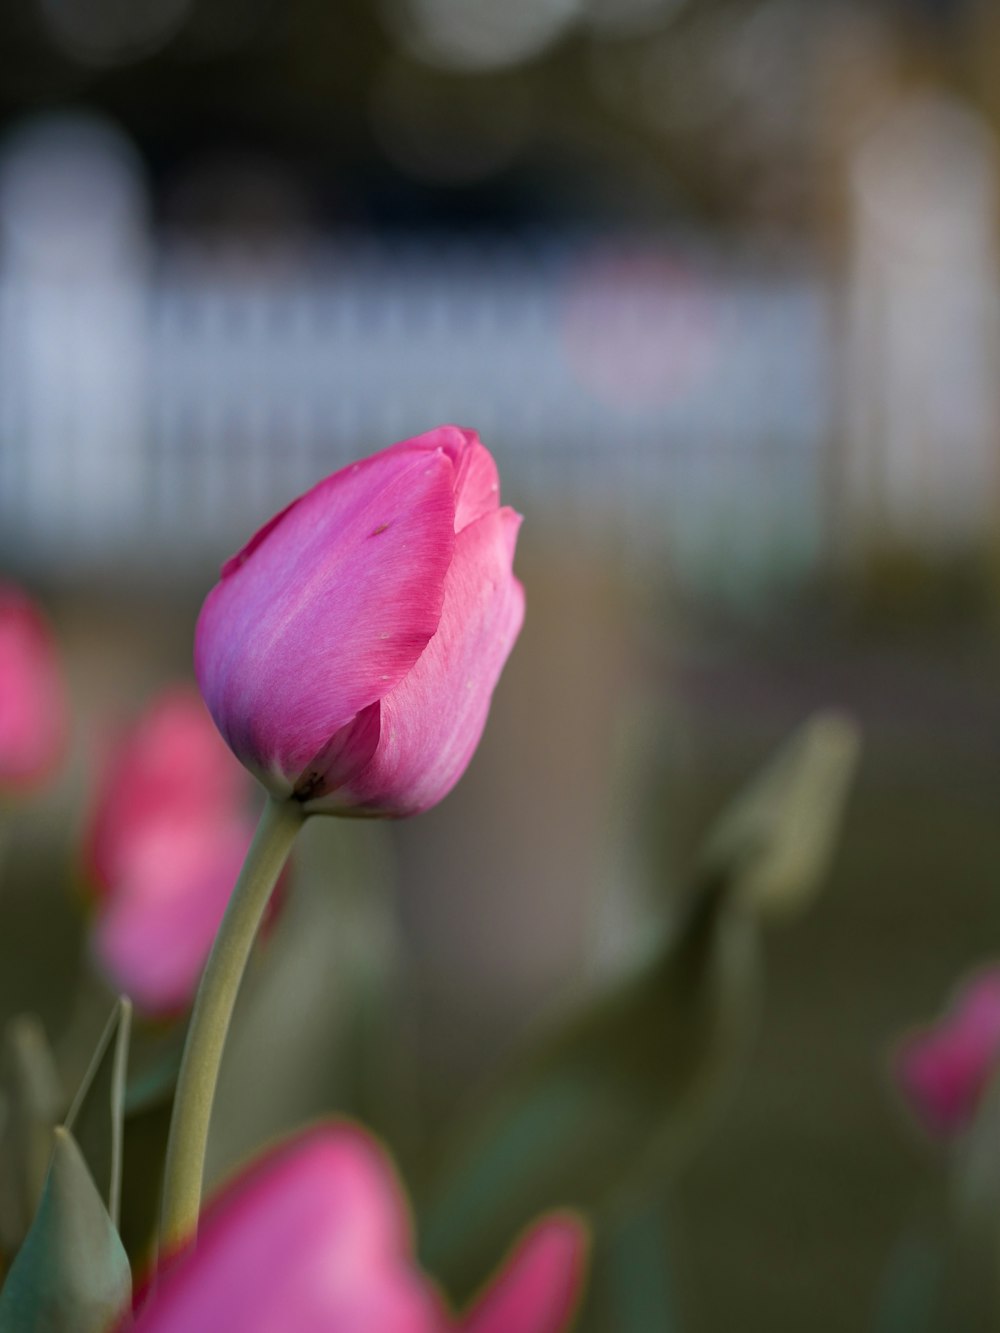 Tilt Shift Lens foto de tulipas cor-de-rosa